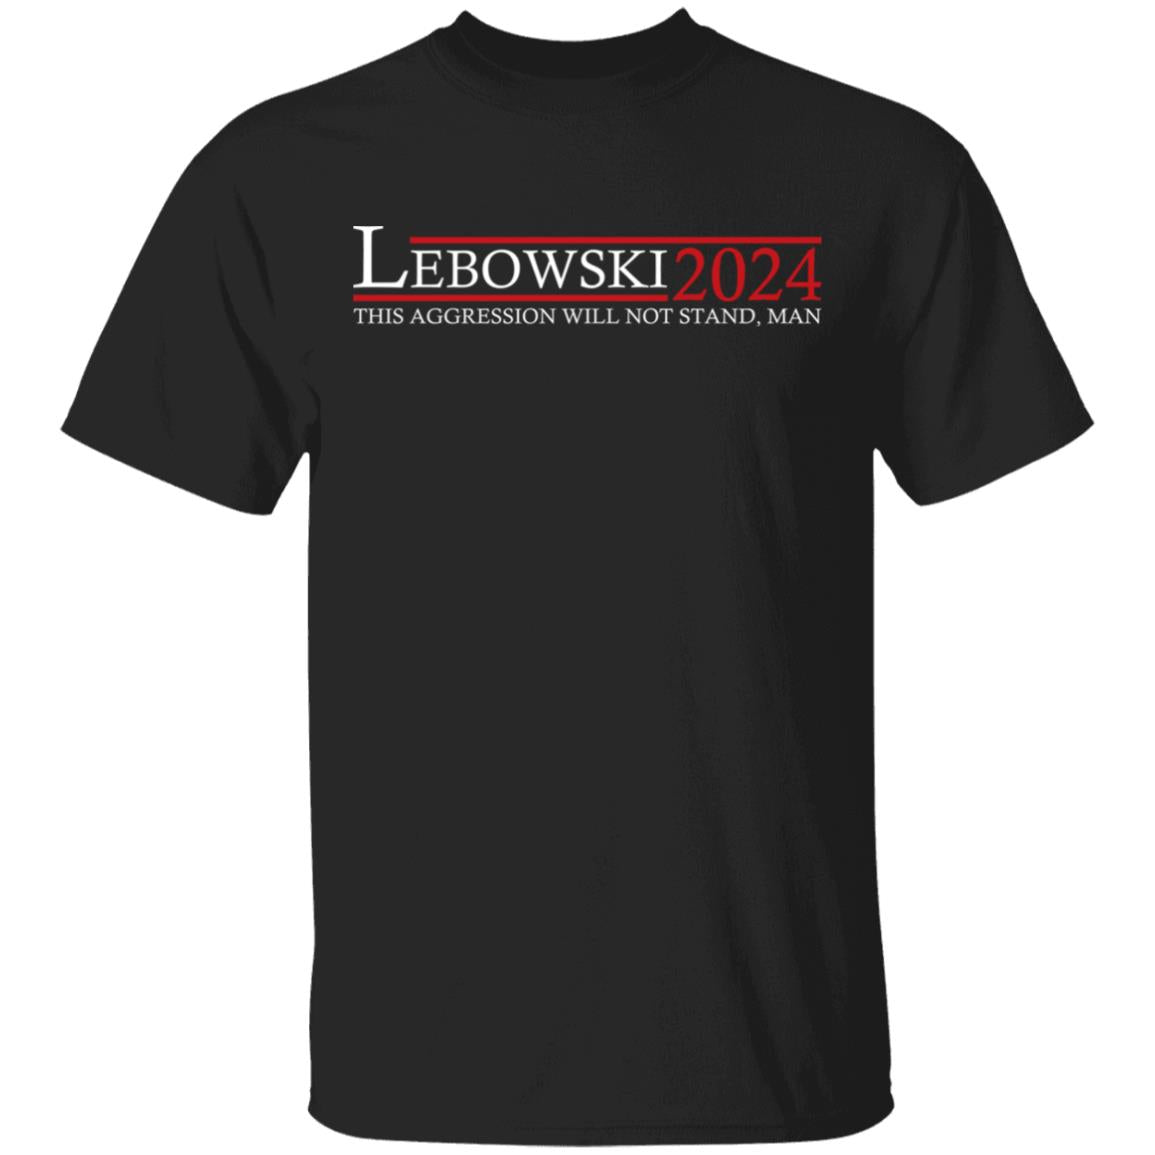 Lebowski 2024 Cotton Tee The Dude's Threads